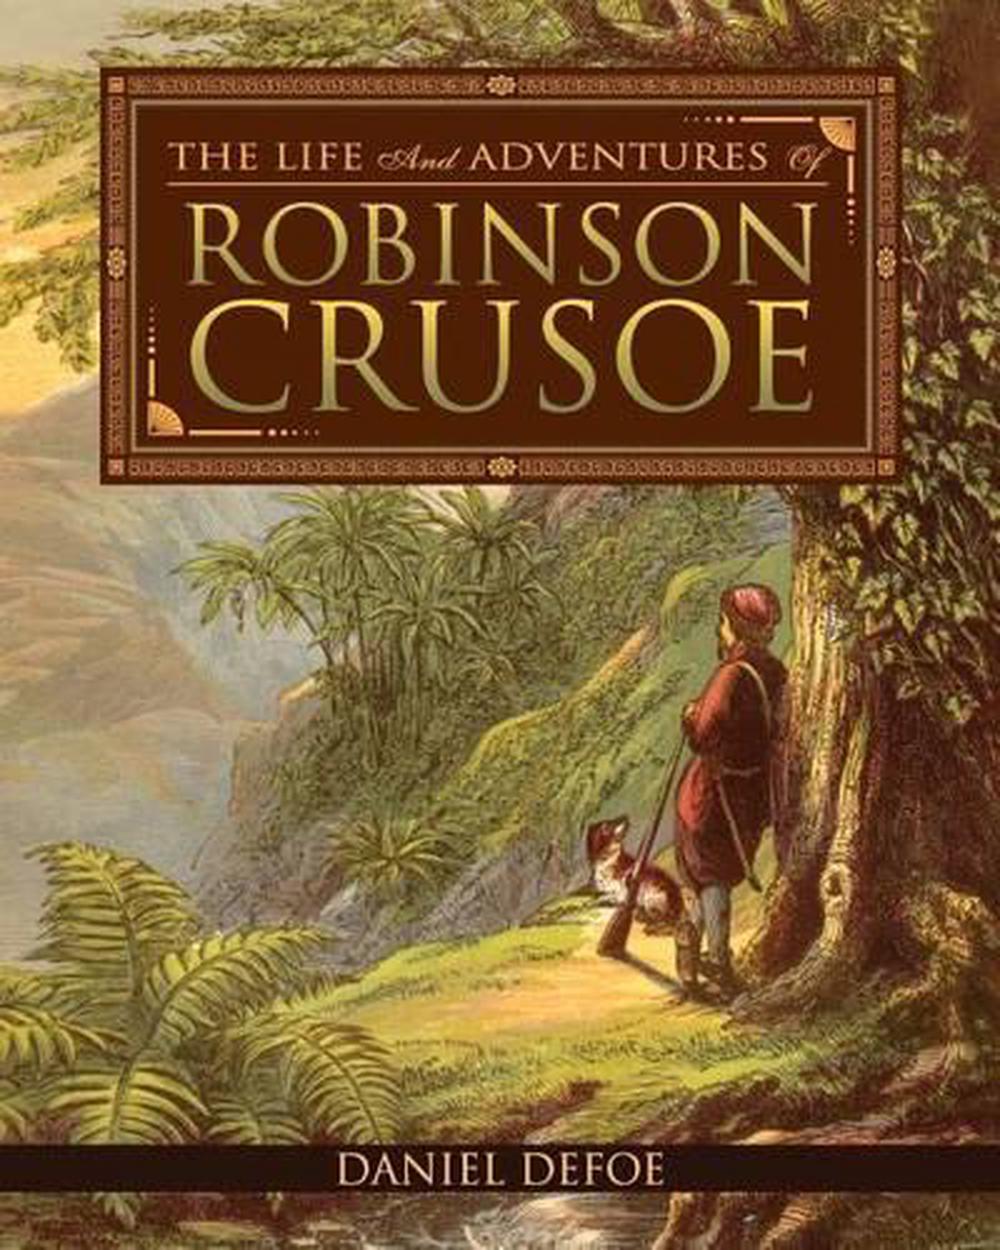 Робинзон крузо на английском языке. Defoe Daniel "Robinson Crusoe". Life and Adventures of Robinson Crusoe. Книга Robinson Crusoe. Робинзон Крузо обложка книги.